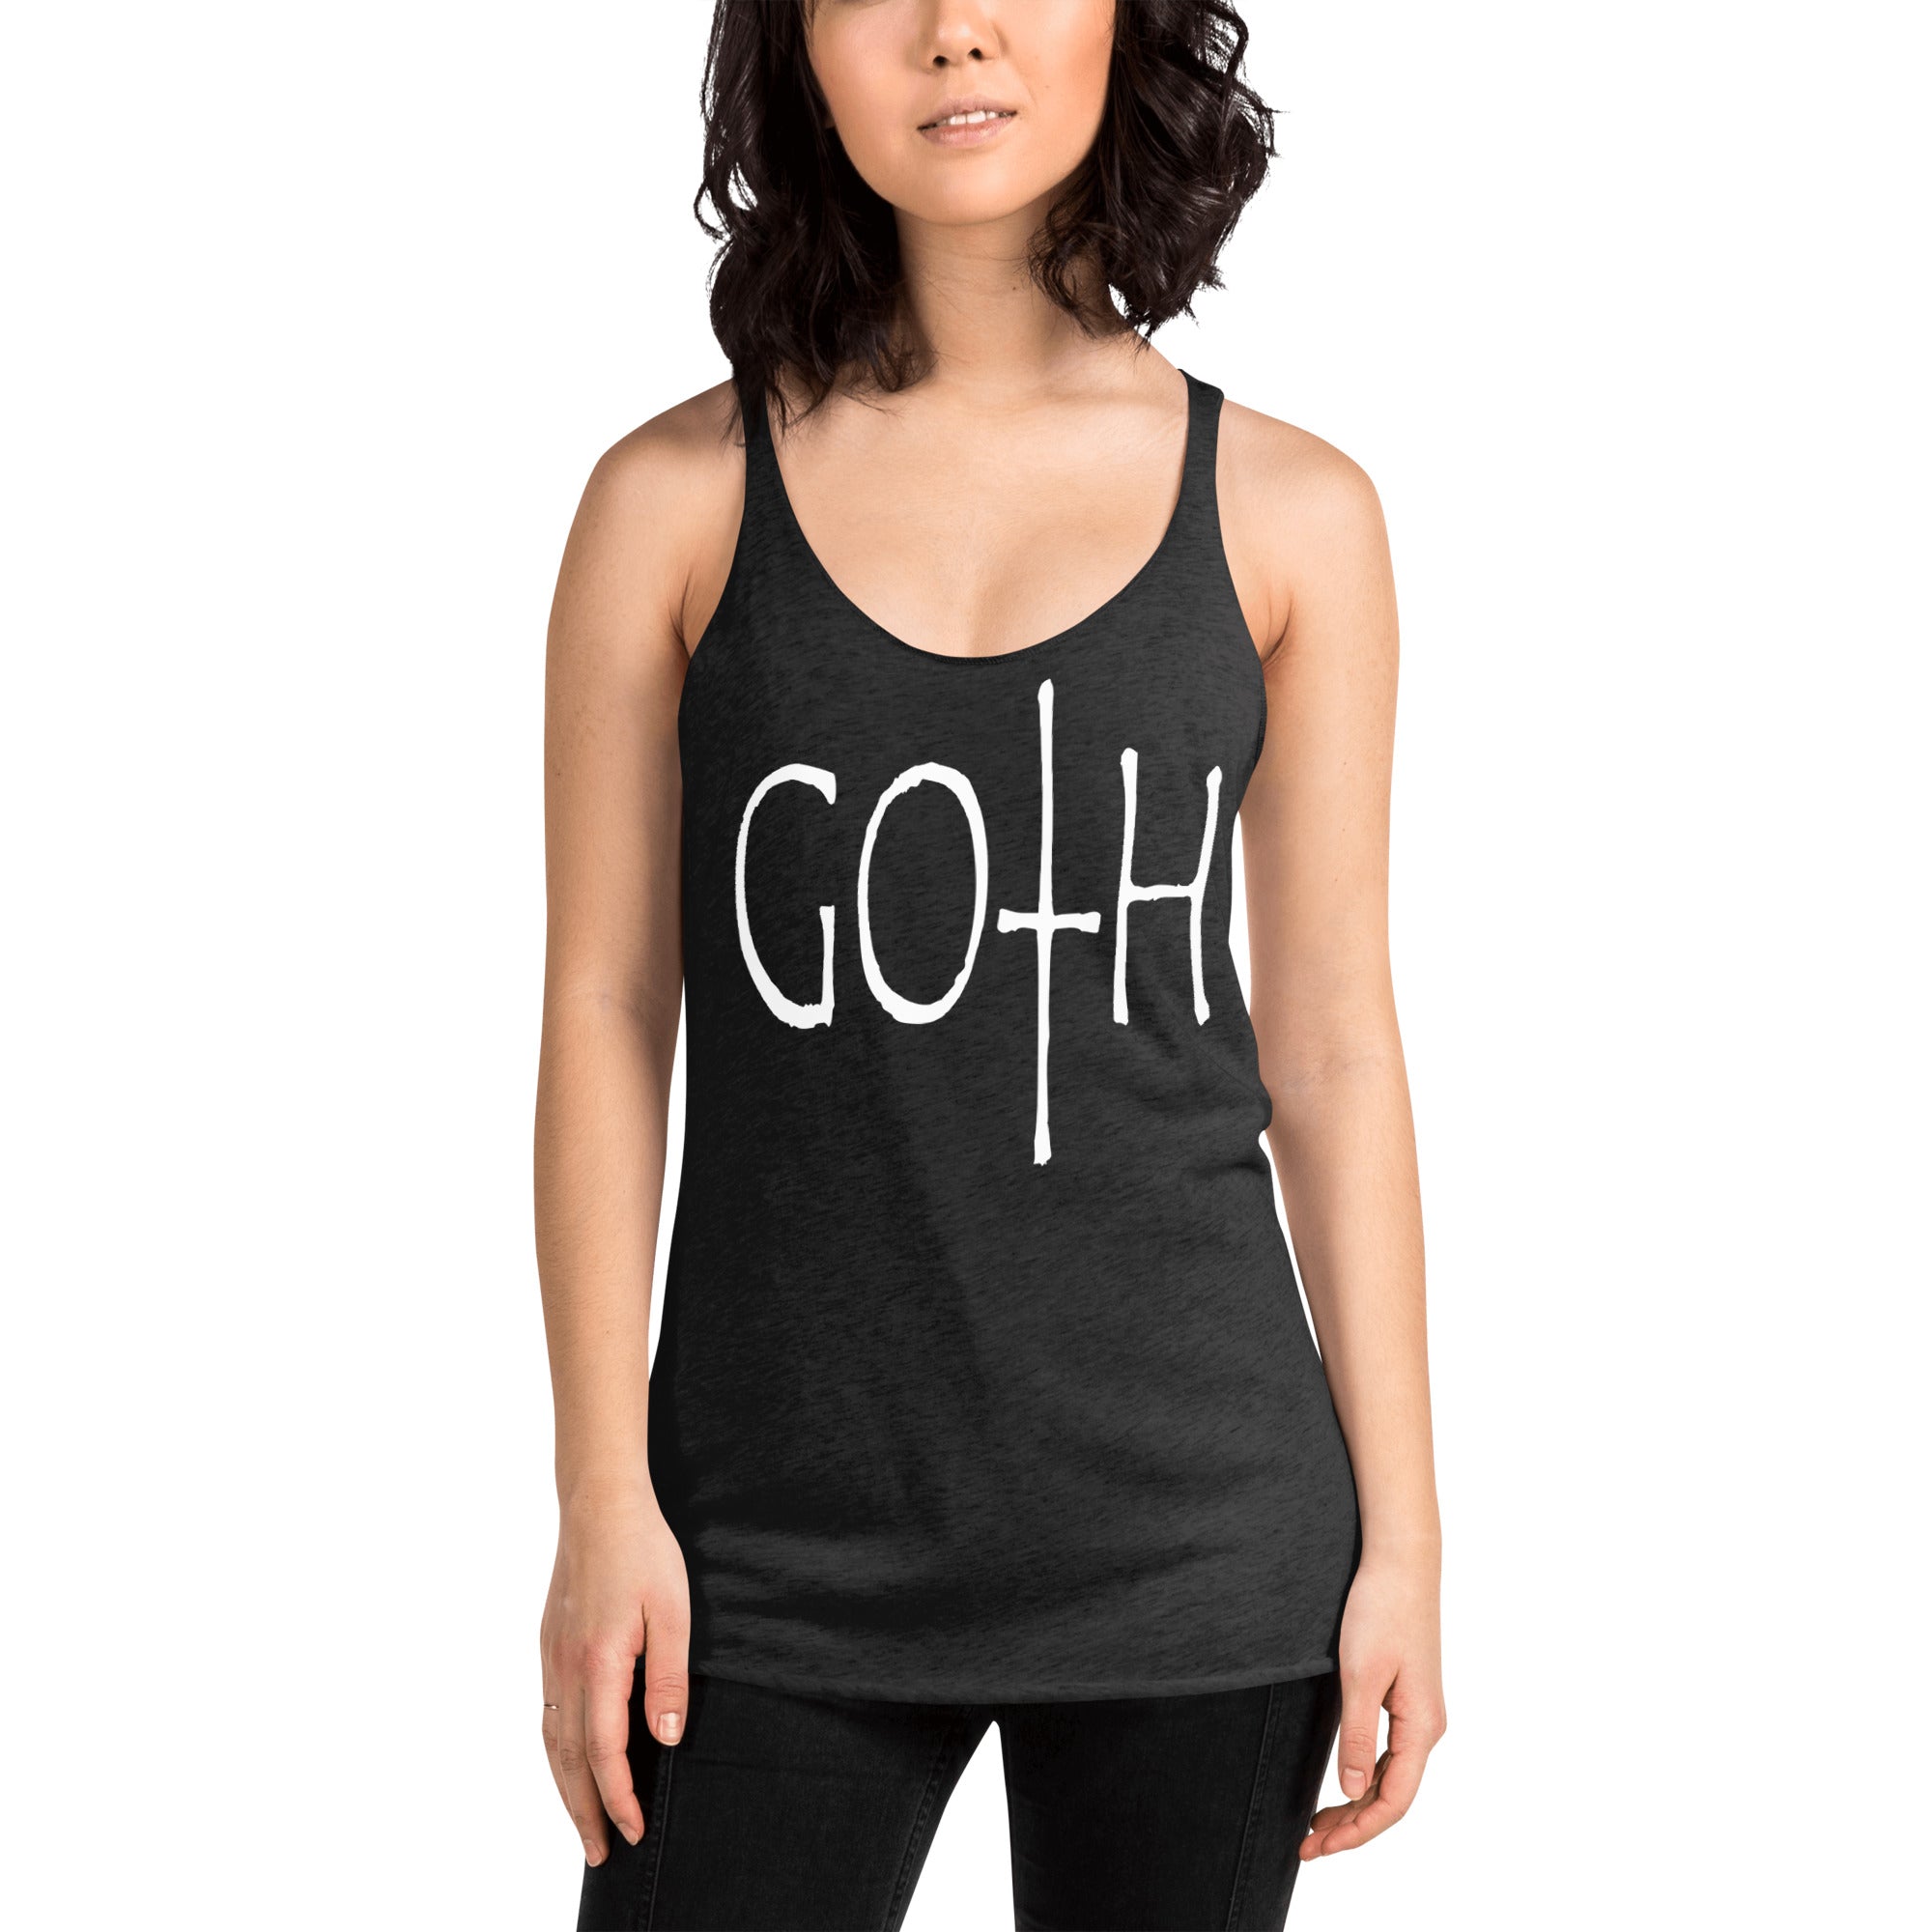 Goth Style Women's Racerback Tank Top Shirt - Edge of Life Designs